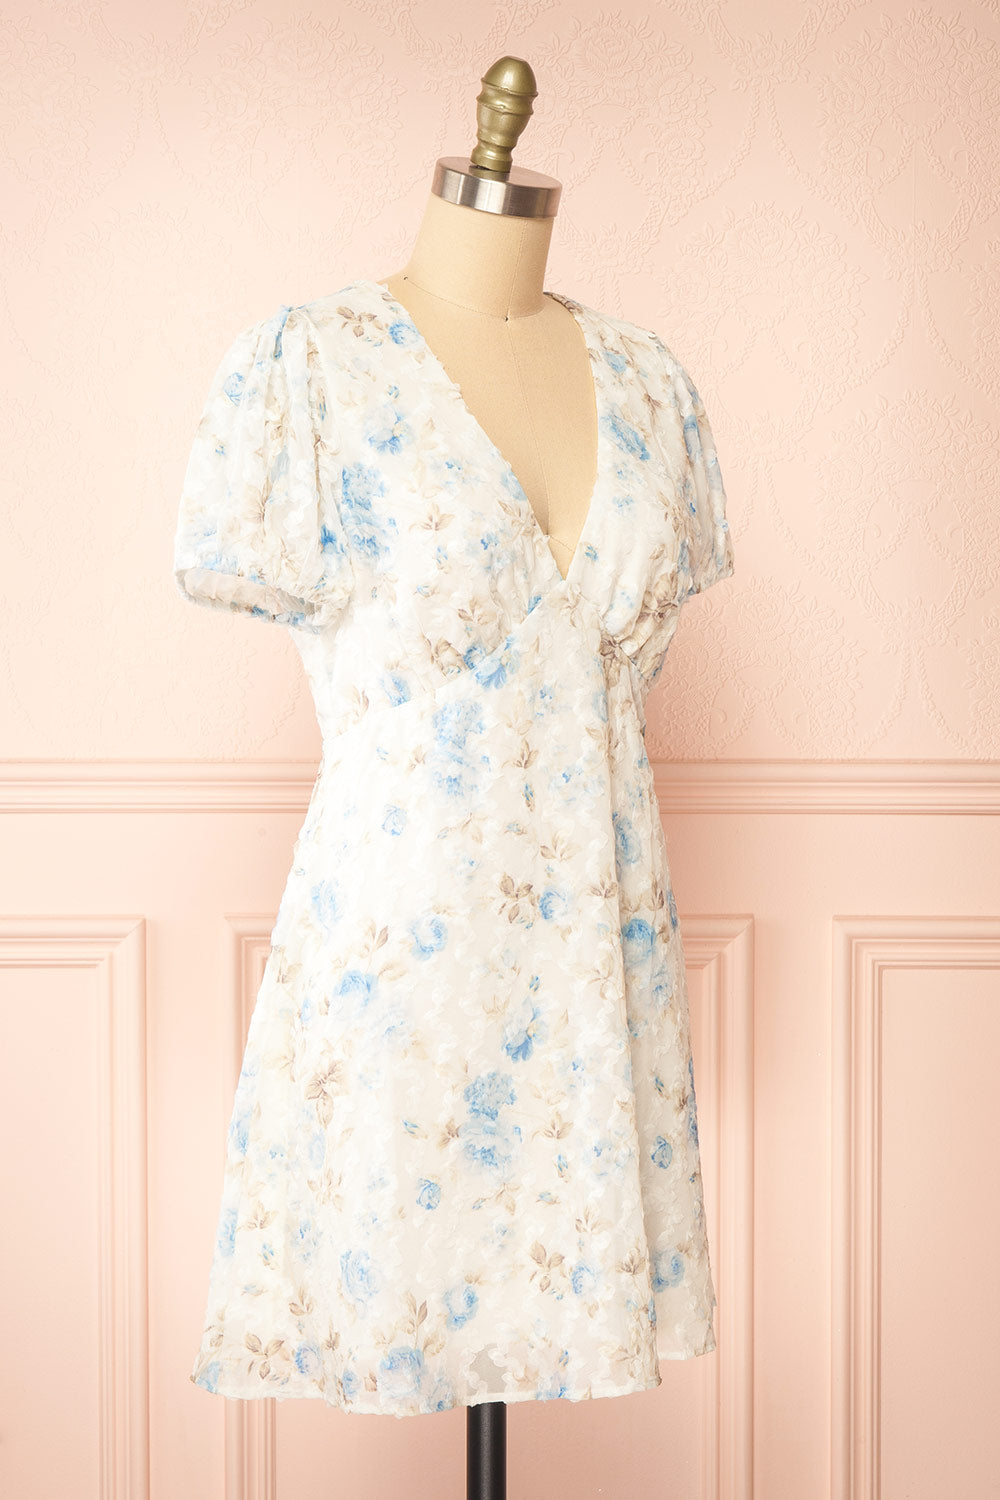 Sykos Short White Floral Chiffon Dress | Boutique 1861 side view